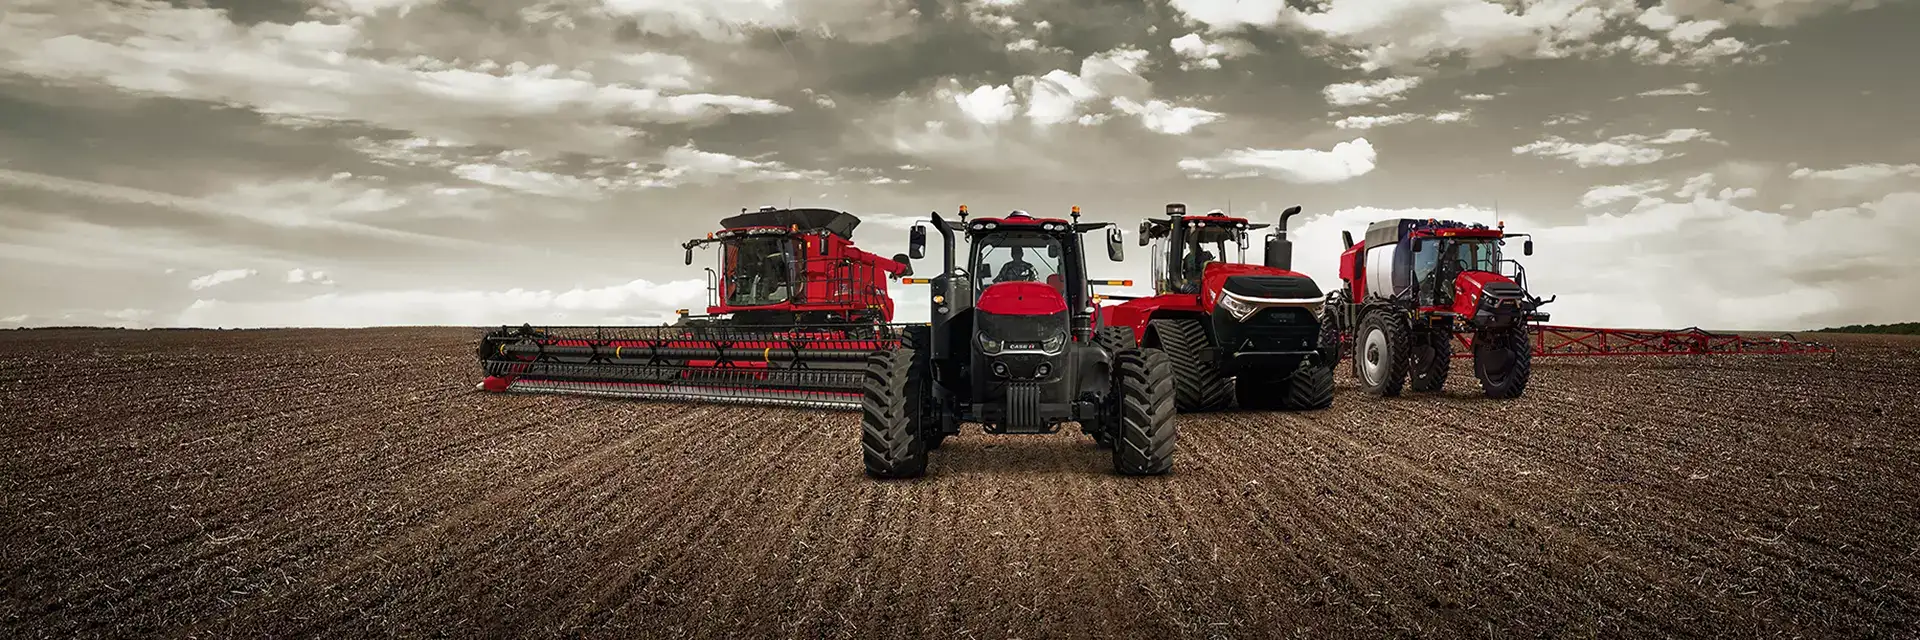 Axial-Flow combine, Magnum tractor, Steiger tractor, Patriot sprayer in field 